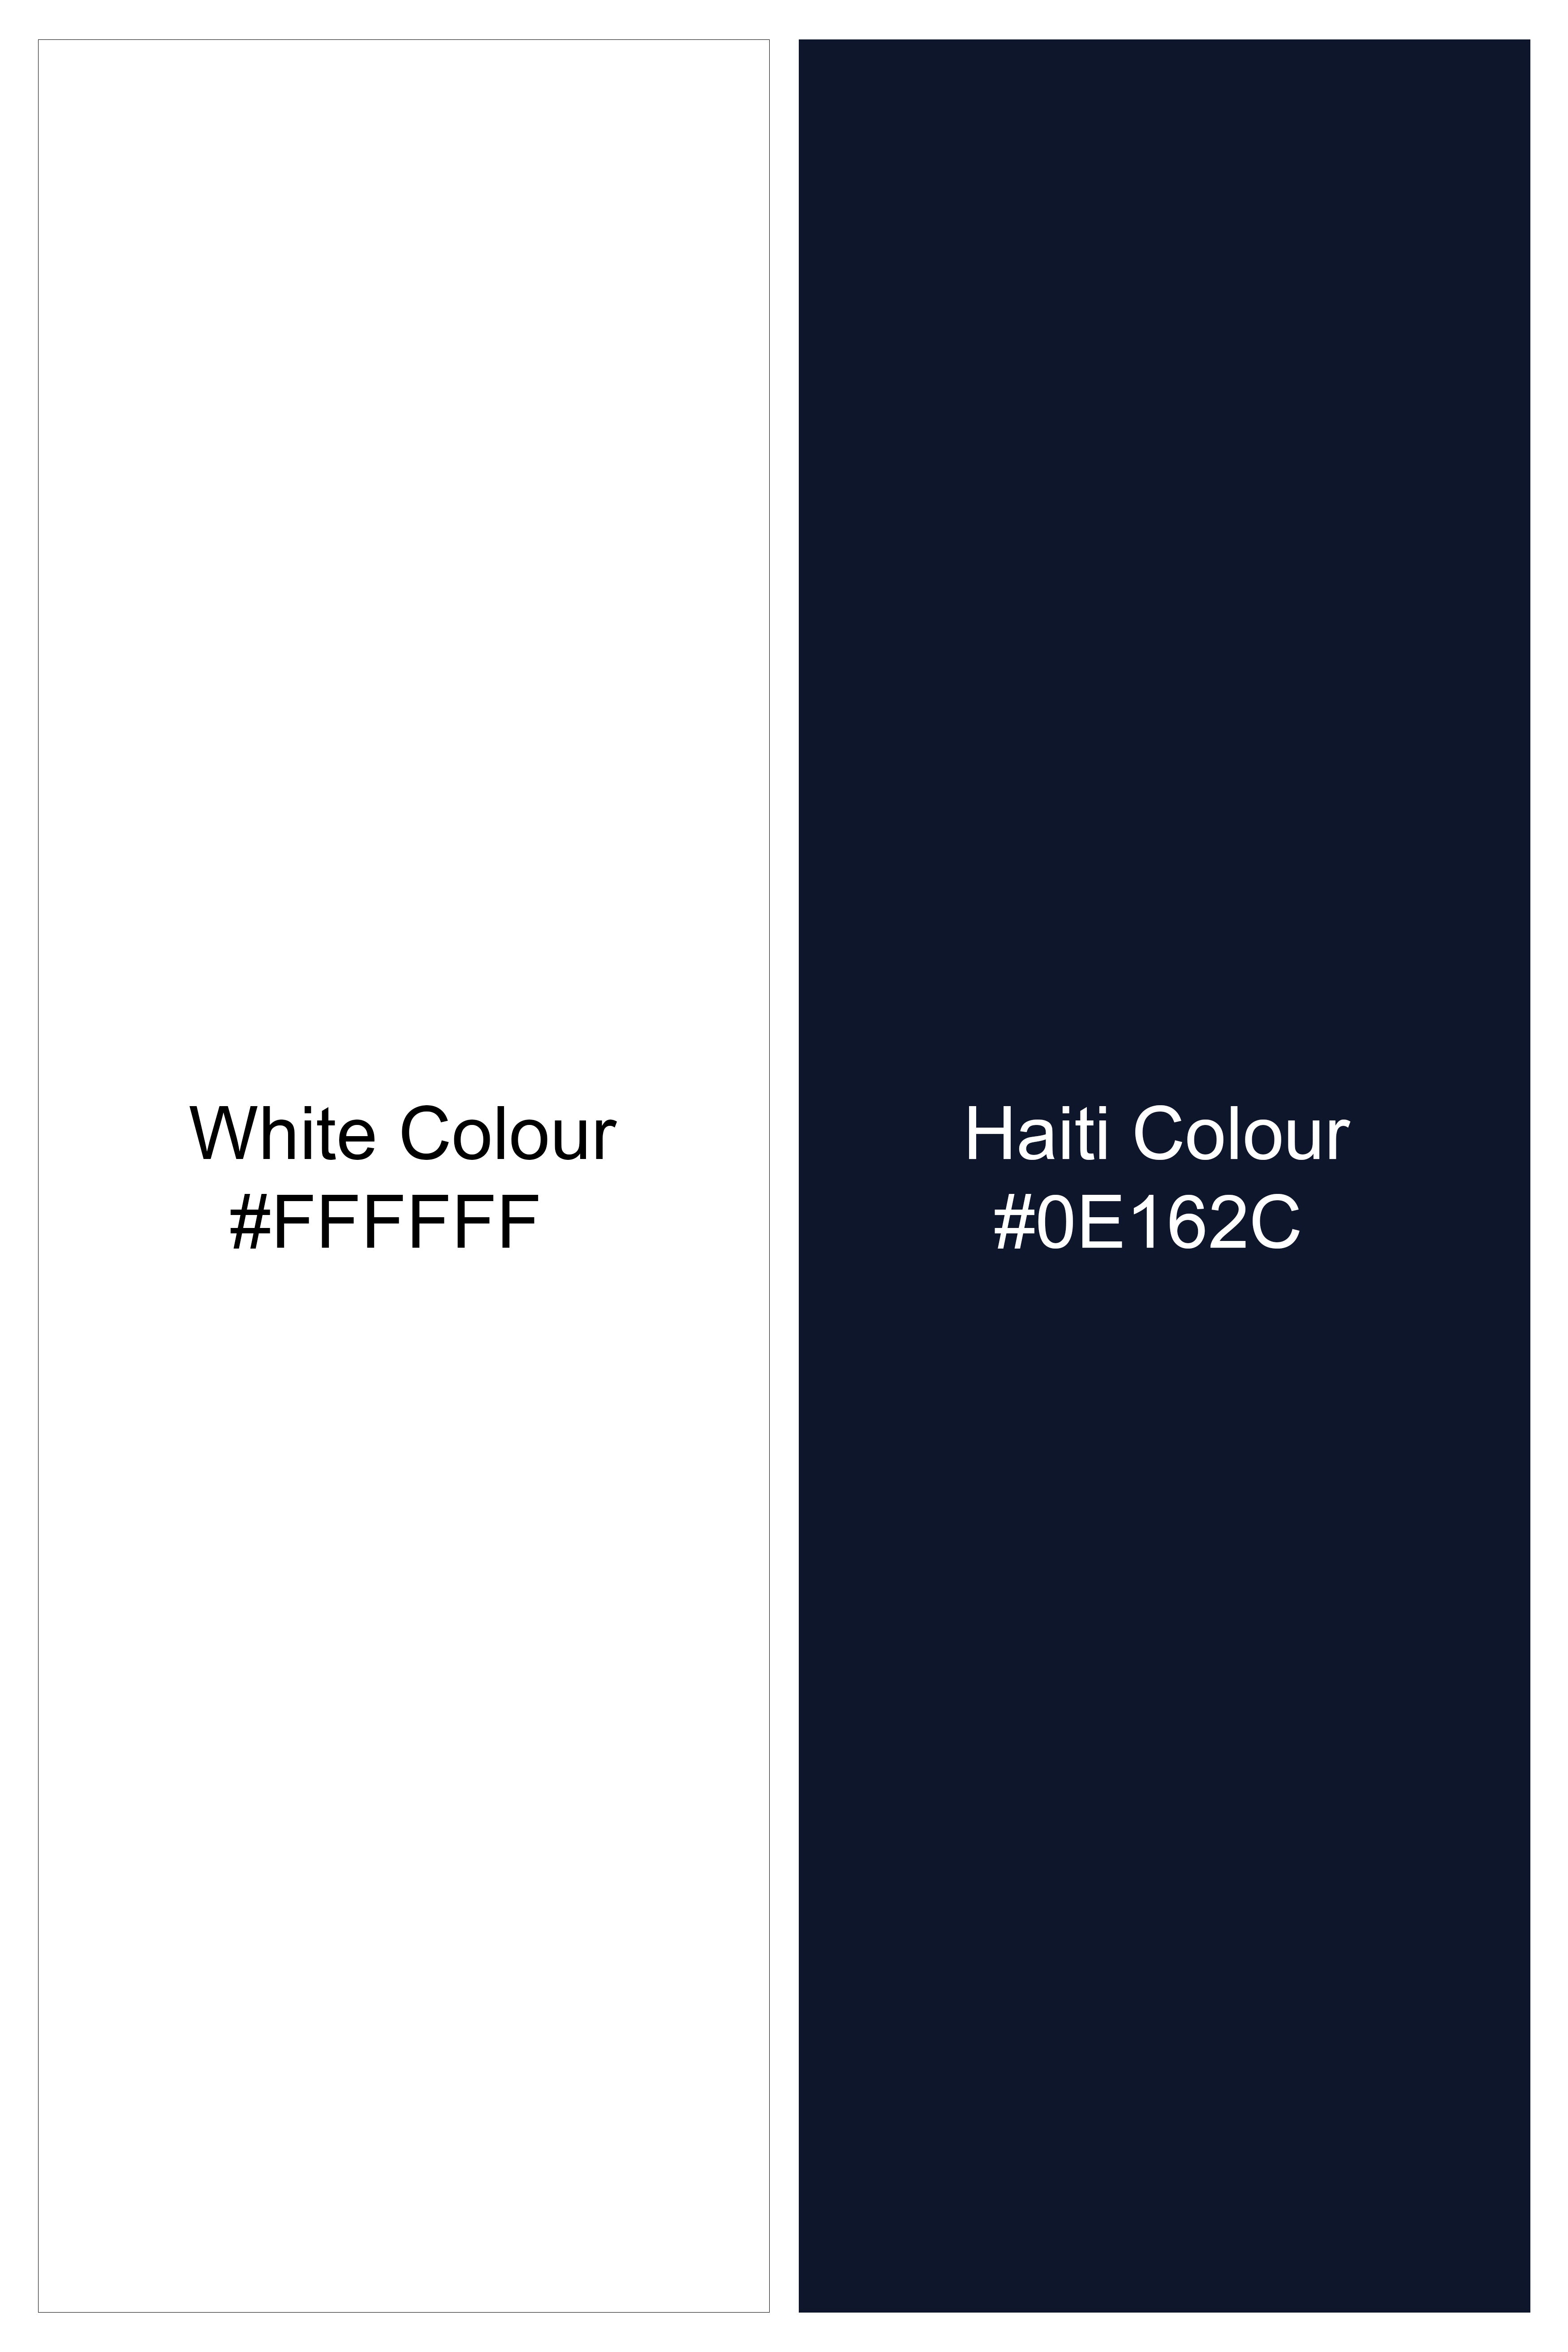 Haiti Navy Blue with White Square Printed Super Soft Premium Cotton Shirt